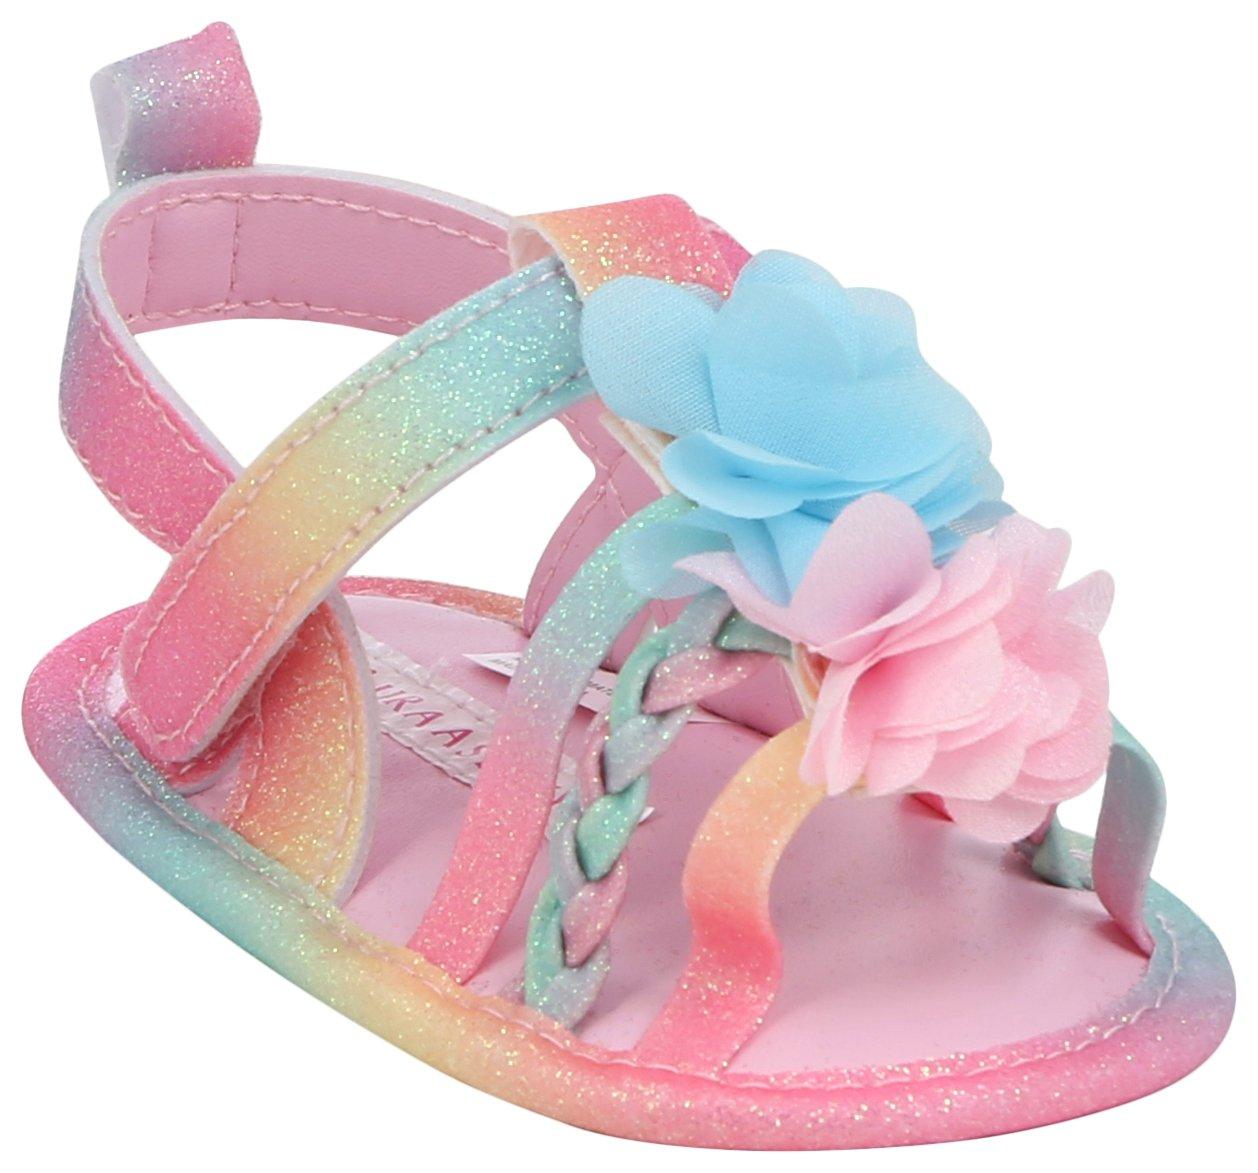 Toddler Girls Rainbow Floral Braided Sandals